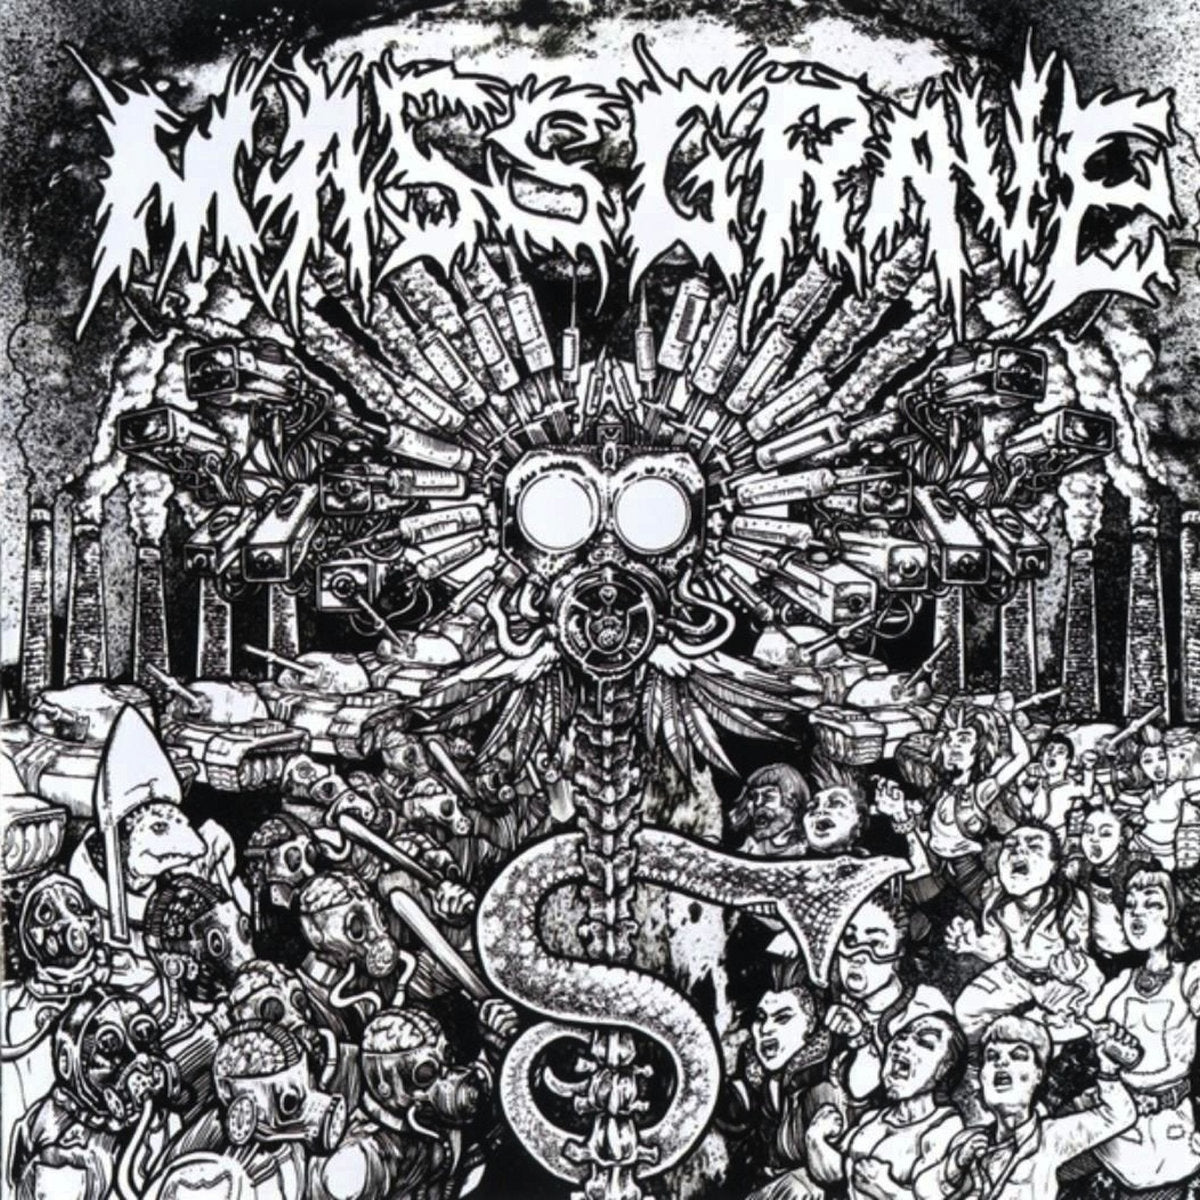 Massgrave - Mass Grave (Vinyl 12")